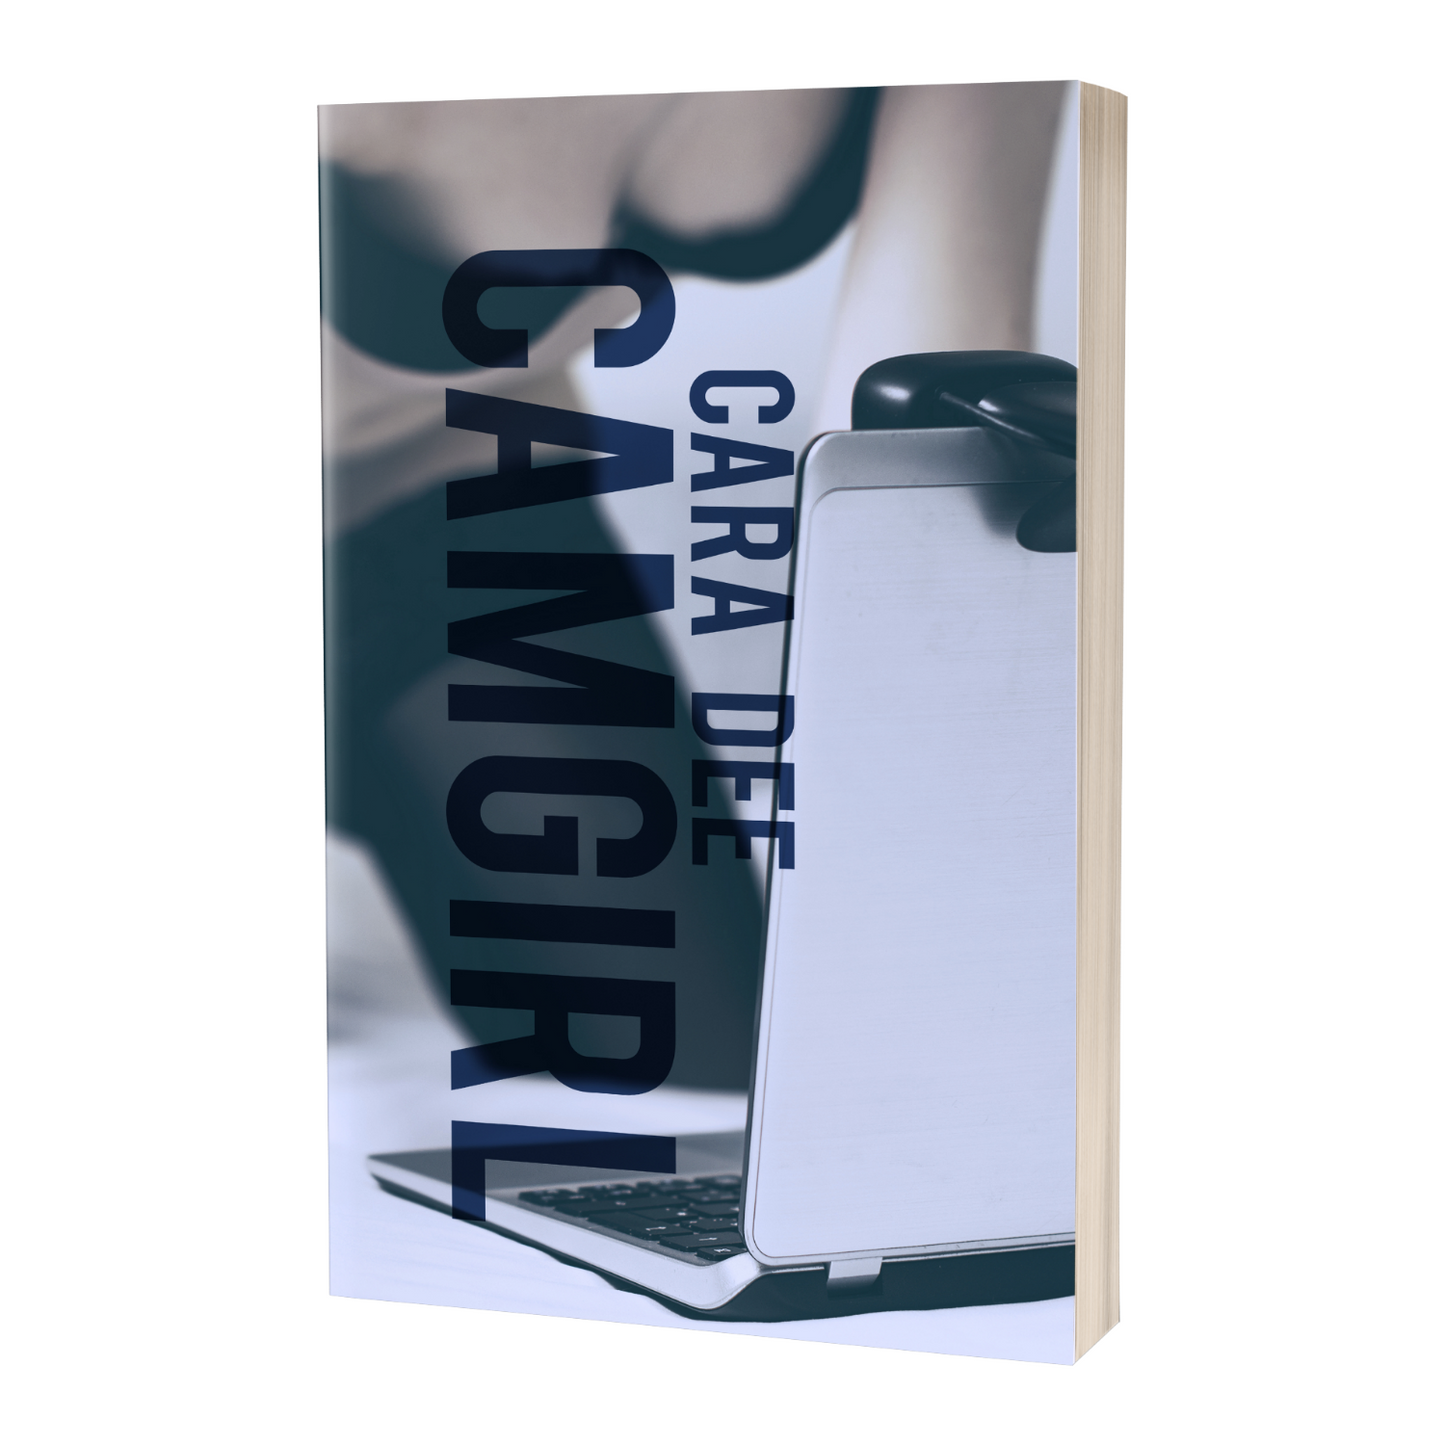 The North Novels #3, Camgirl